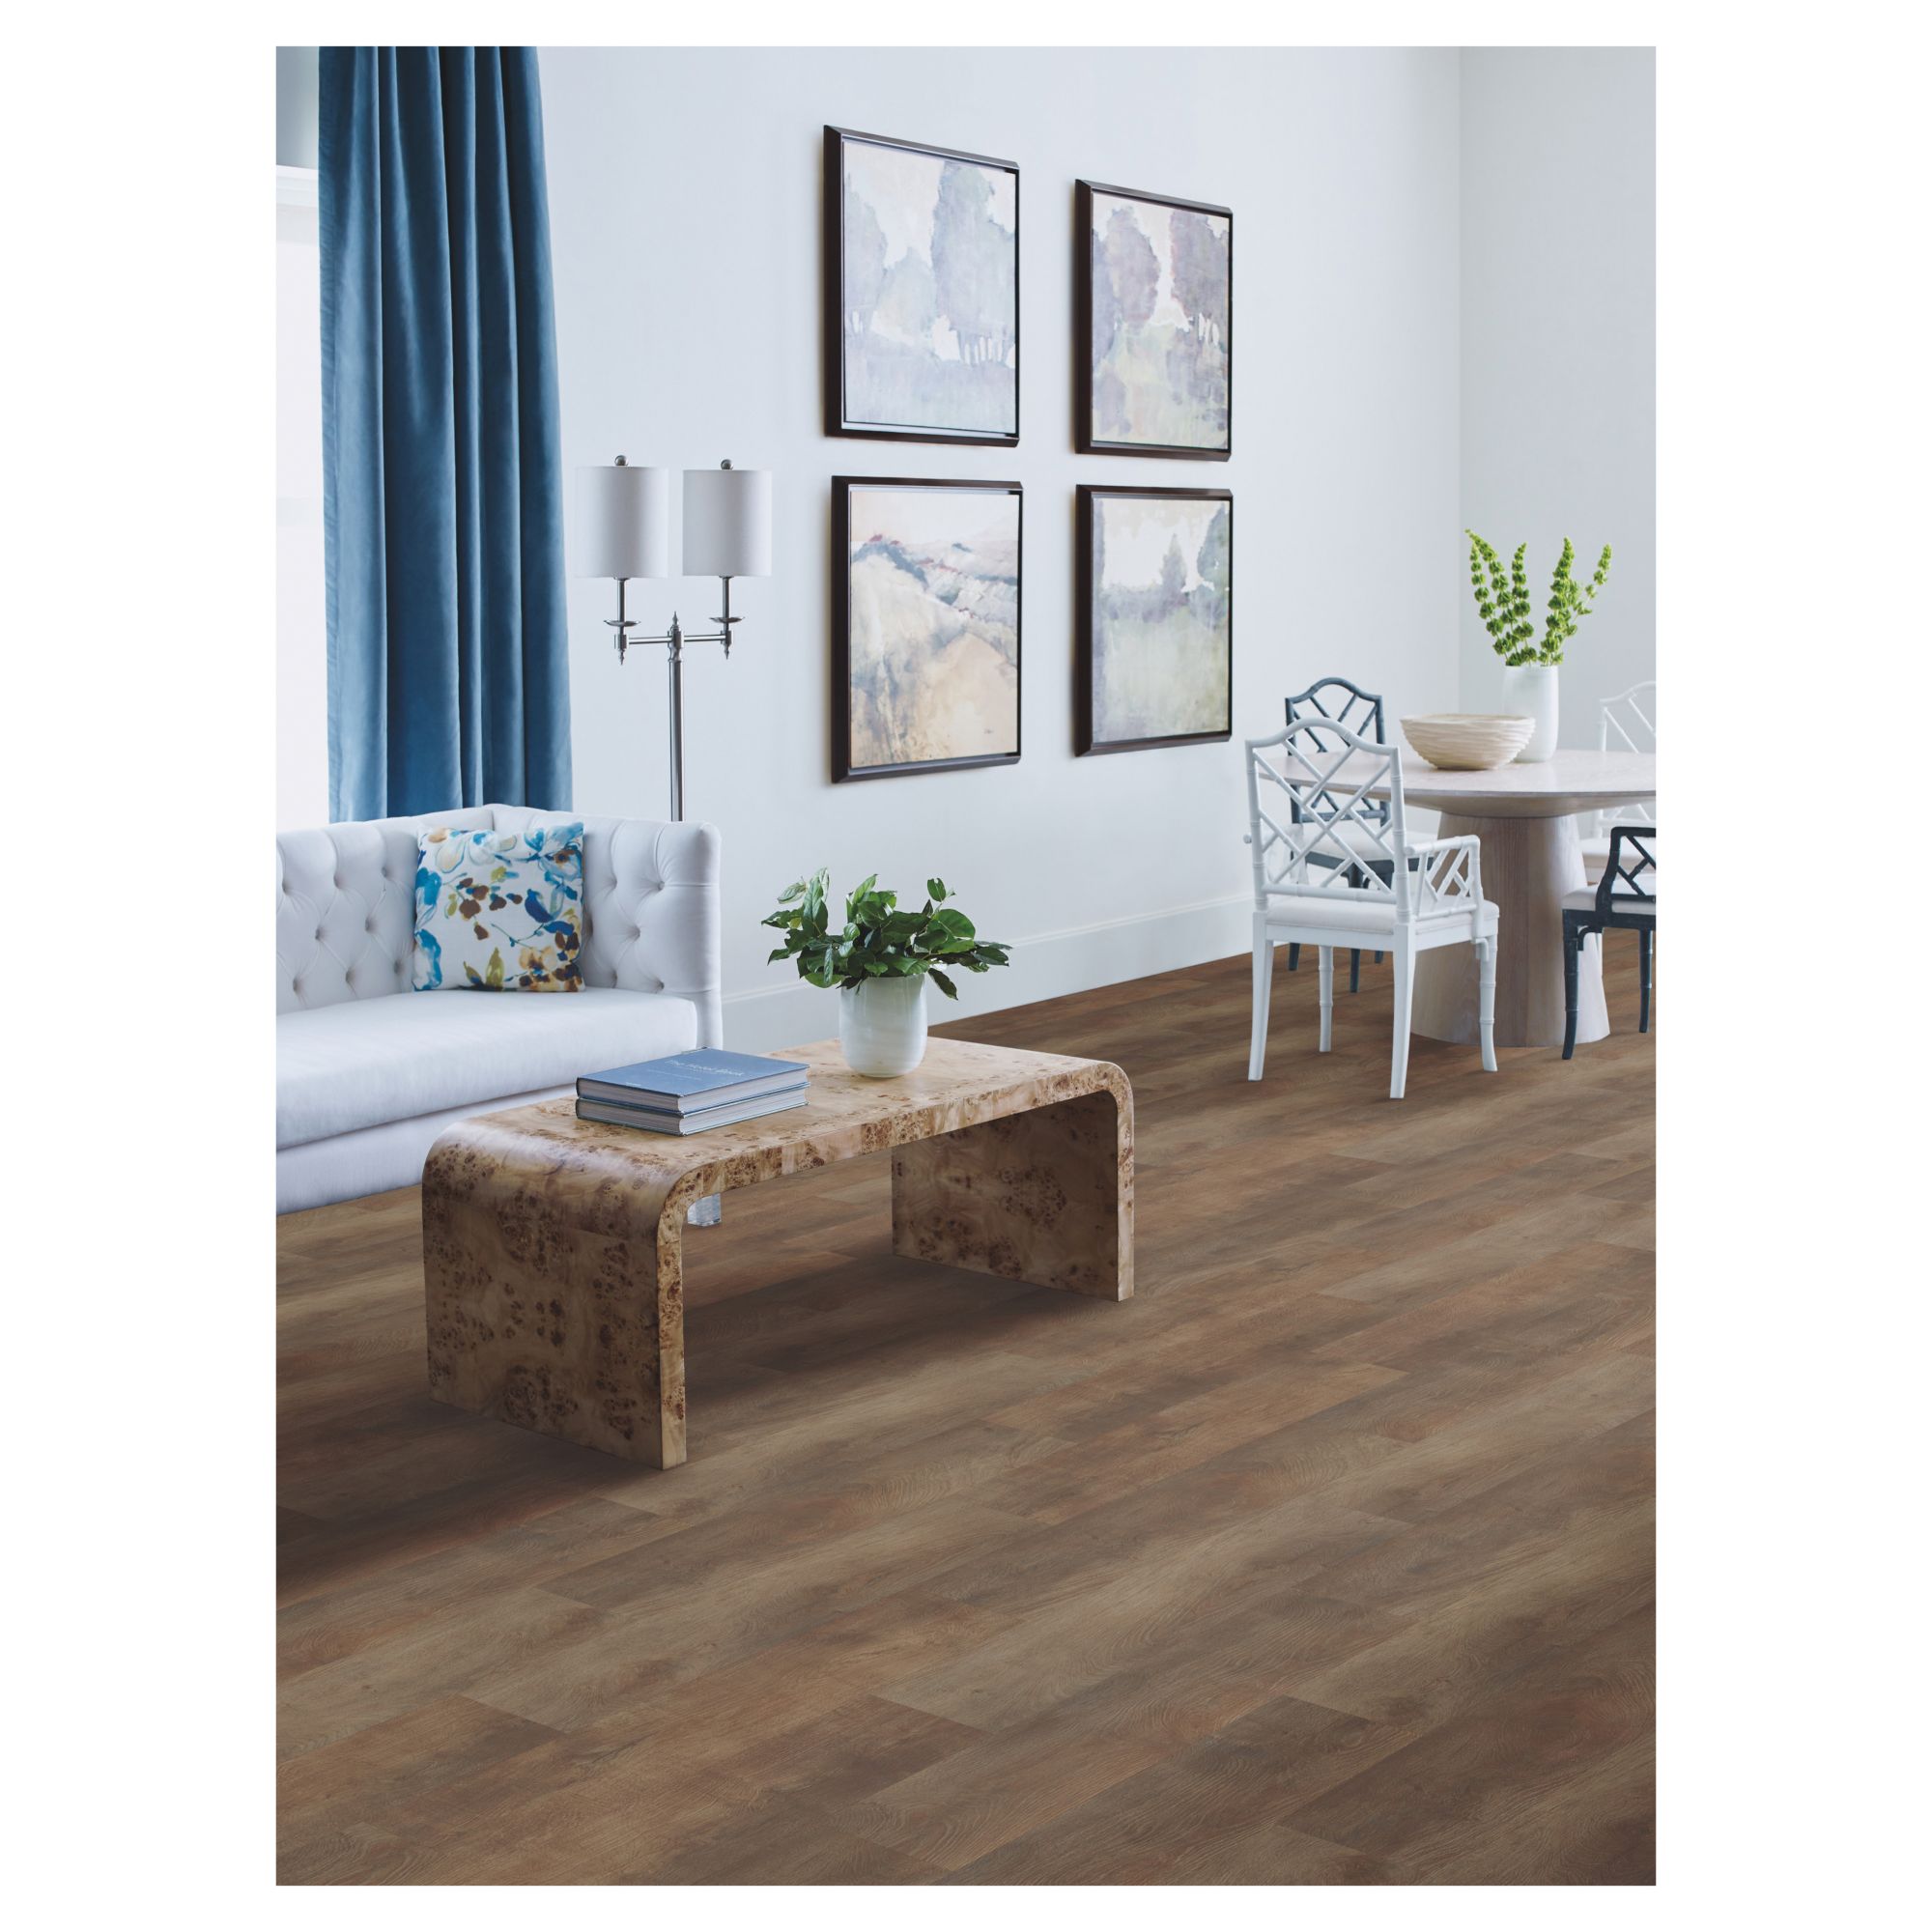 Lifeproof Flooring: How to Make Your Floors Last Longer - Hardwood Bargains  Blog - /blog/lifeproof -flooring-is-there-a-way-to-make-your-floors-last-longer/